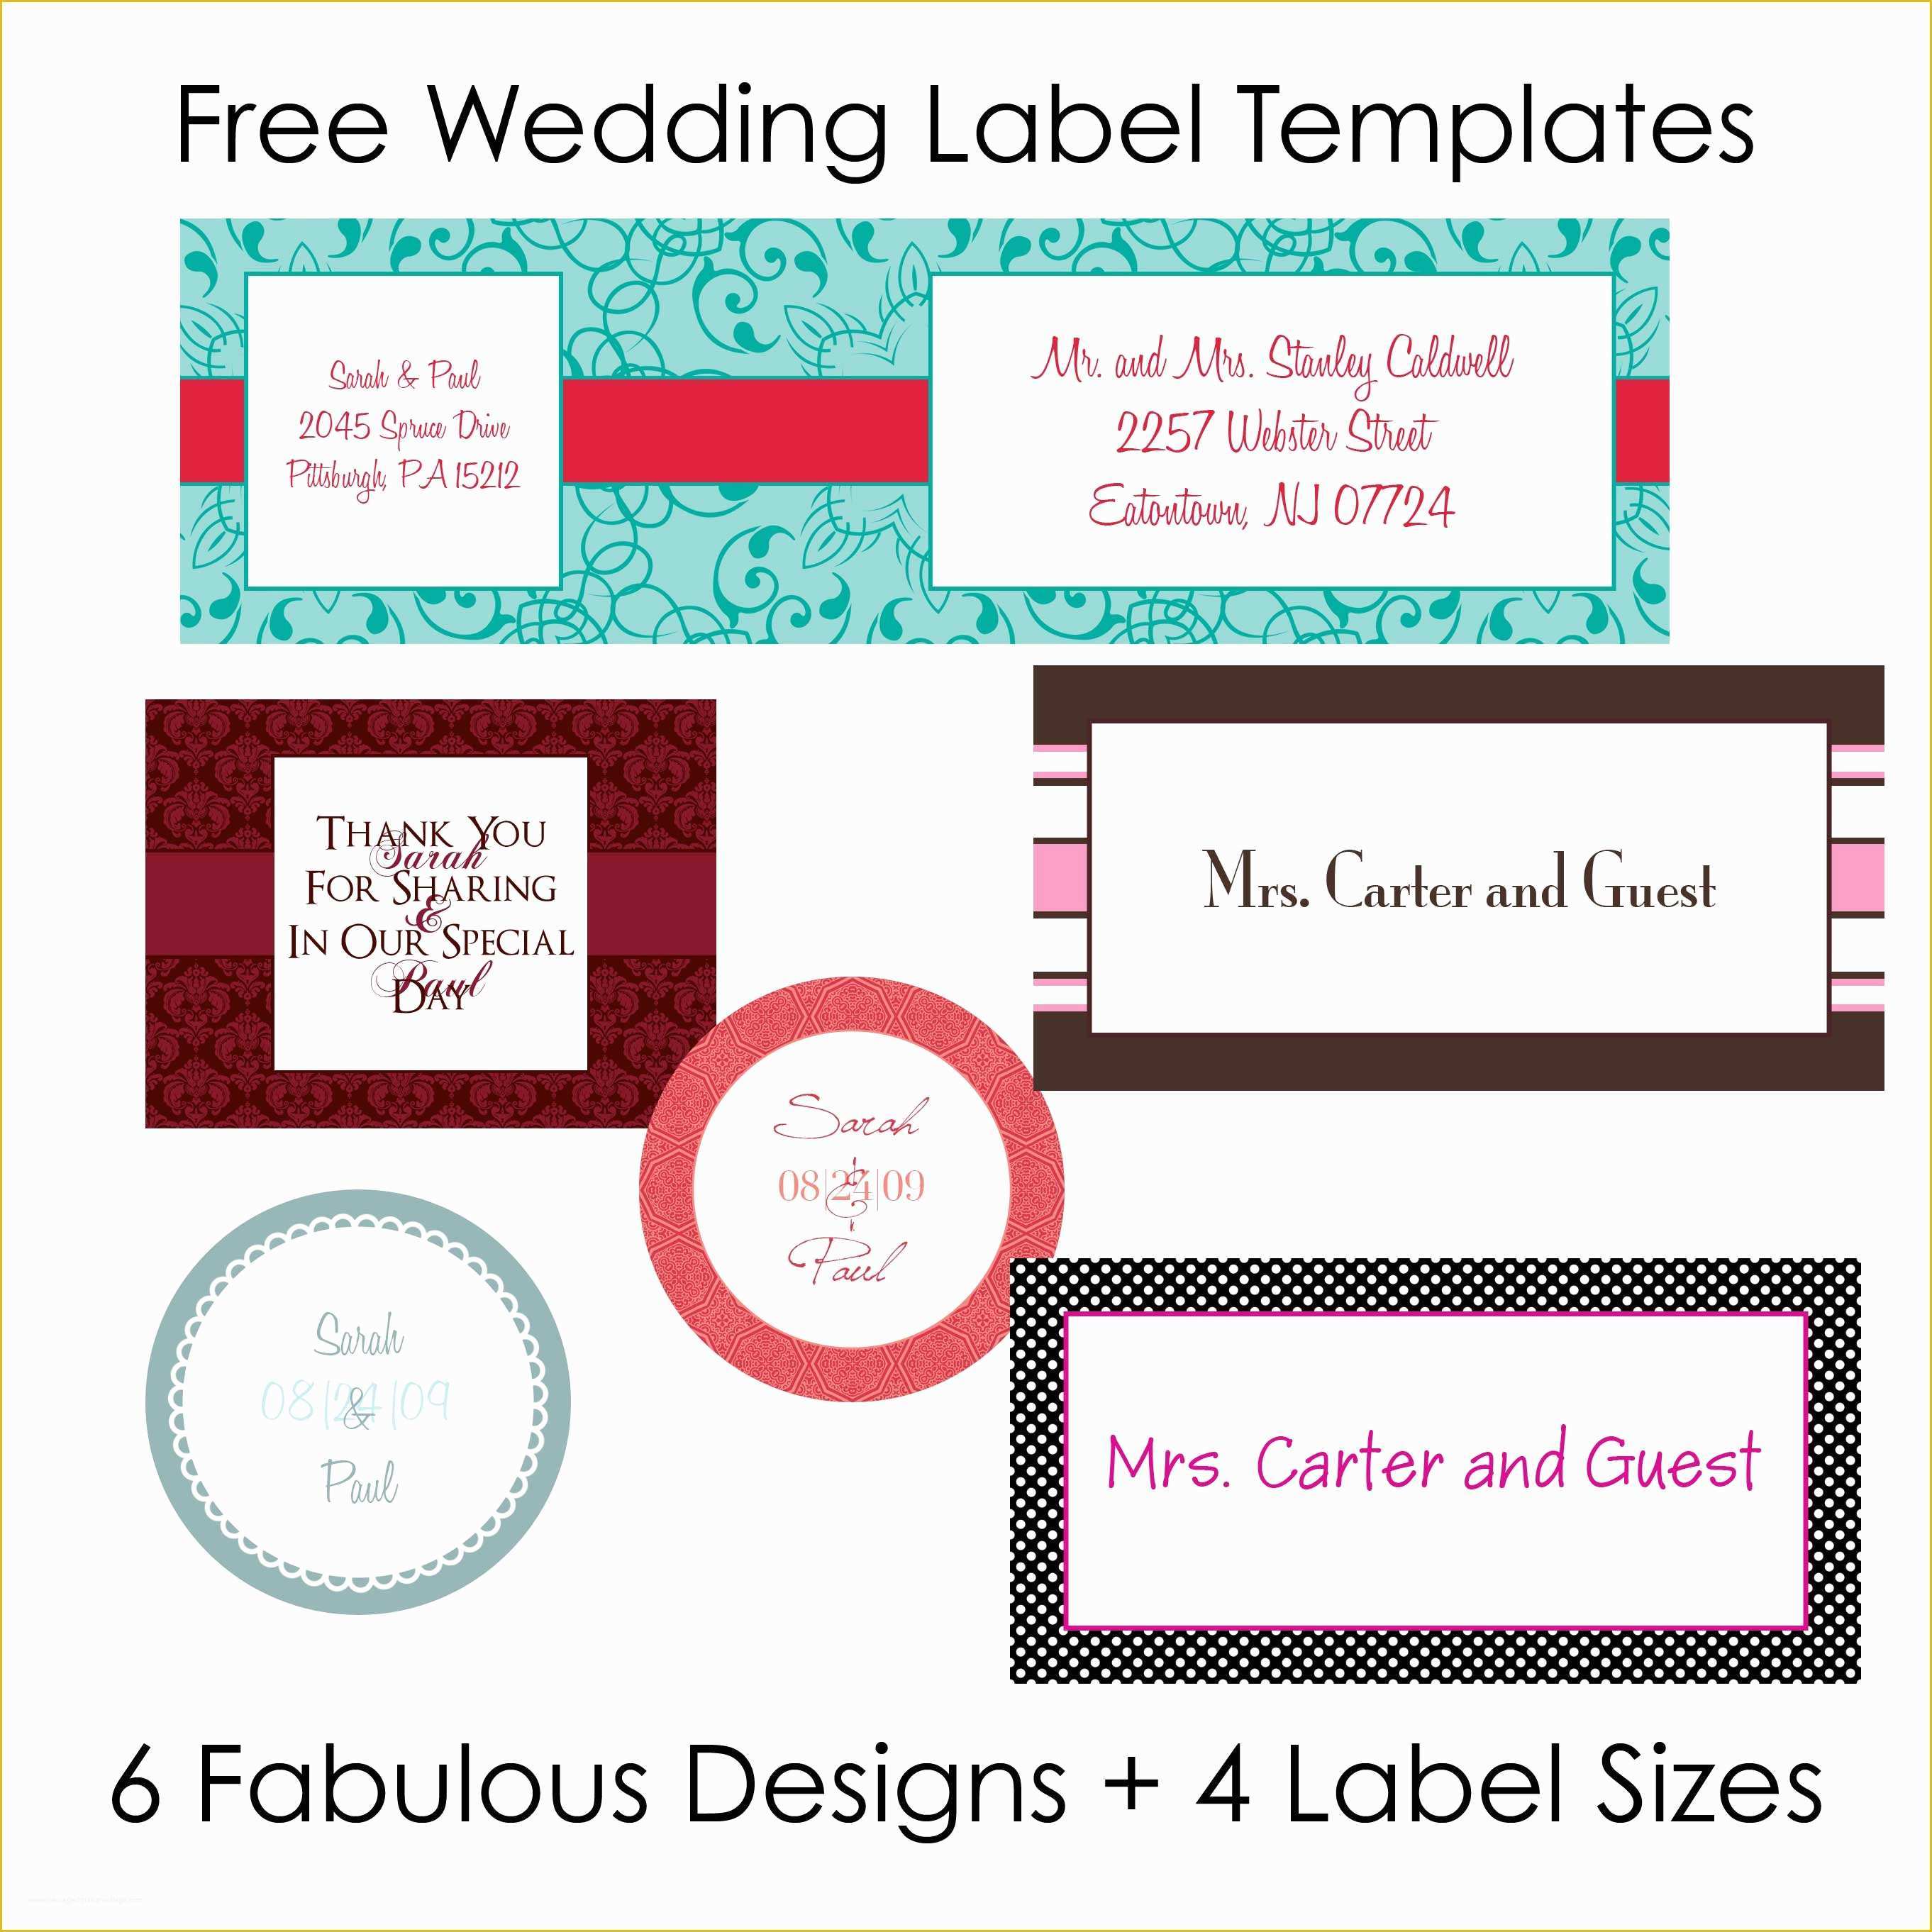 Free Wedding Address Label Templates Of 18 Free Label Designs Free Vintage Label Template